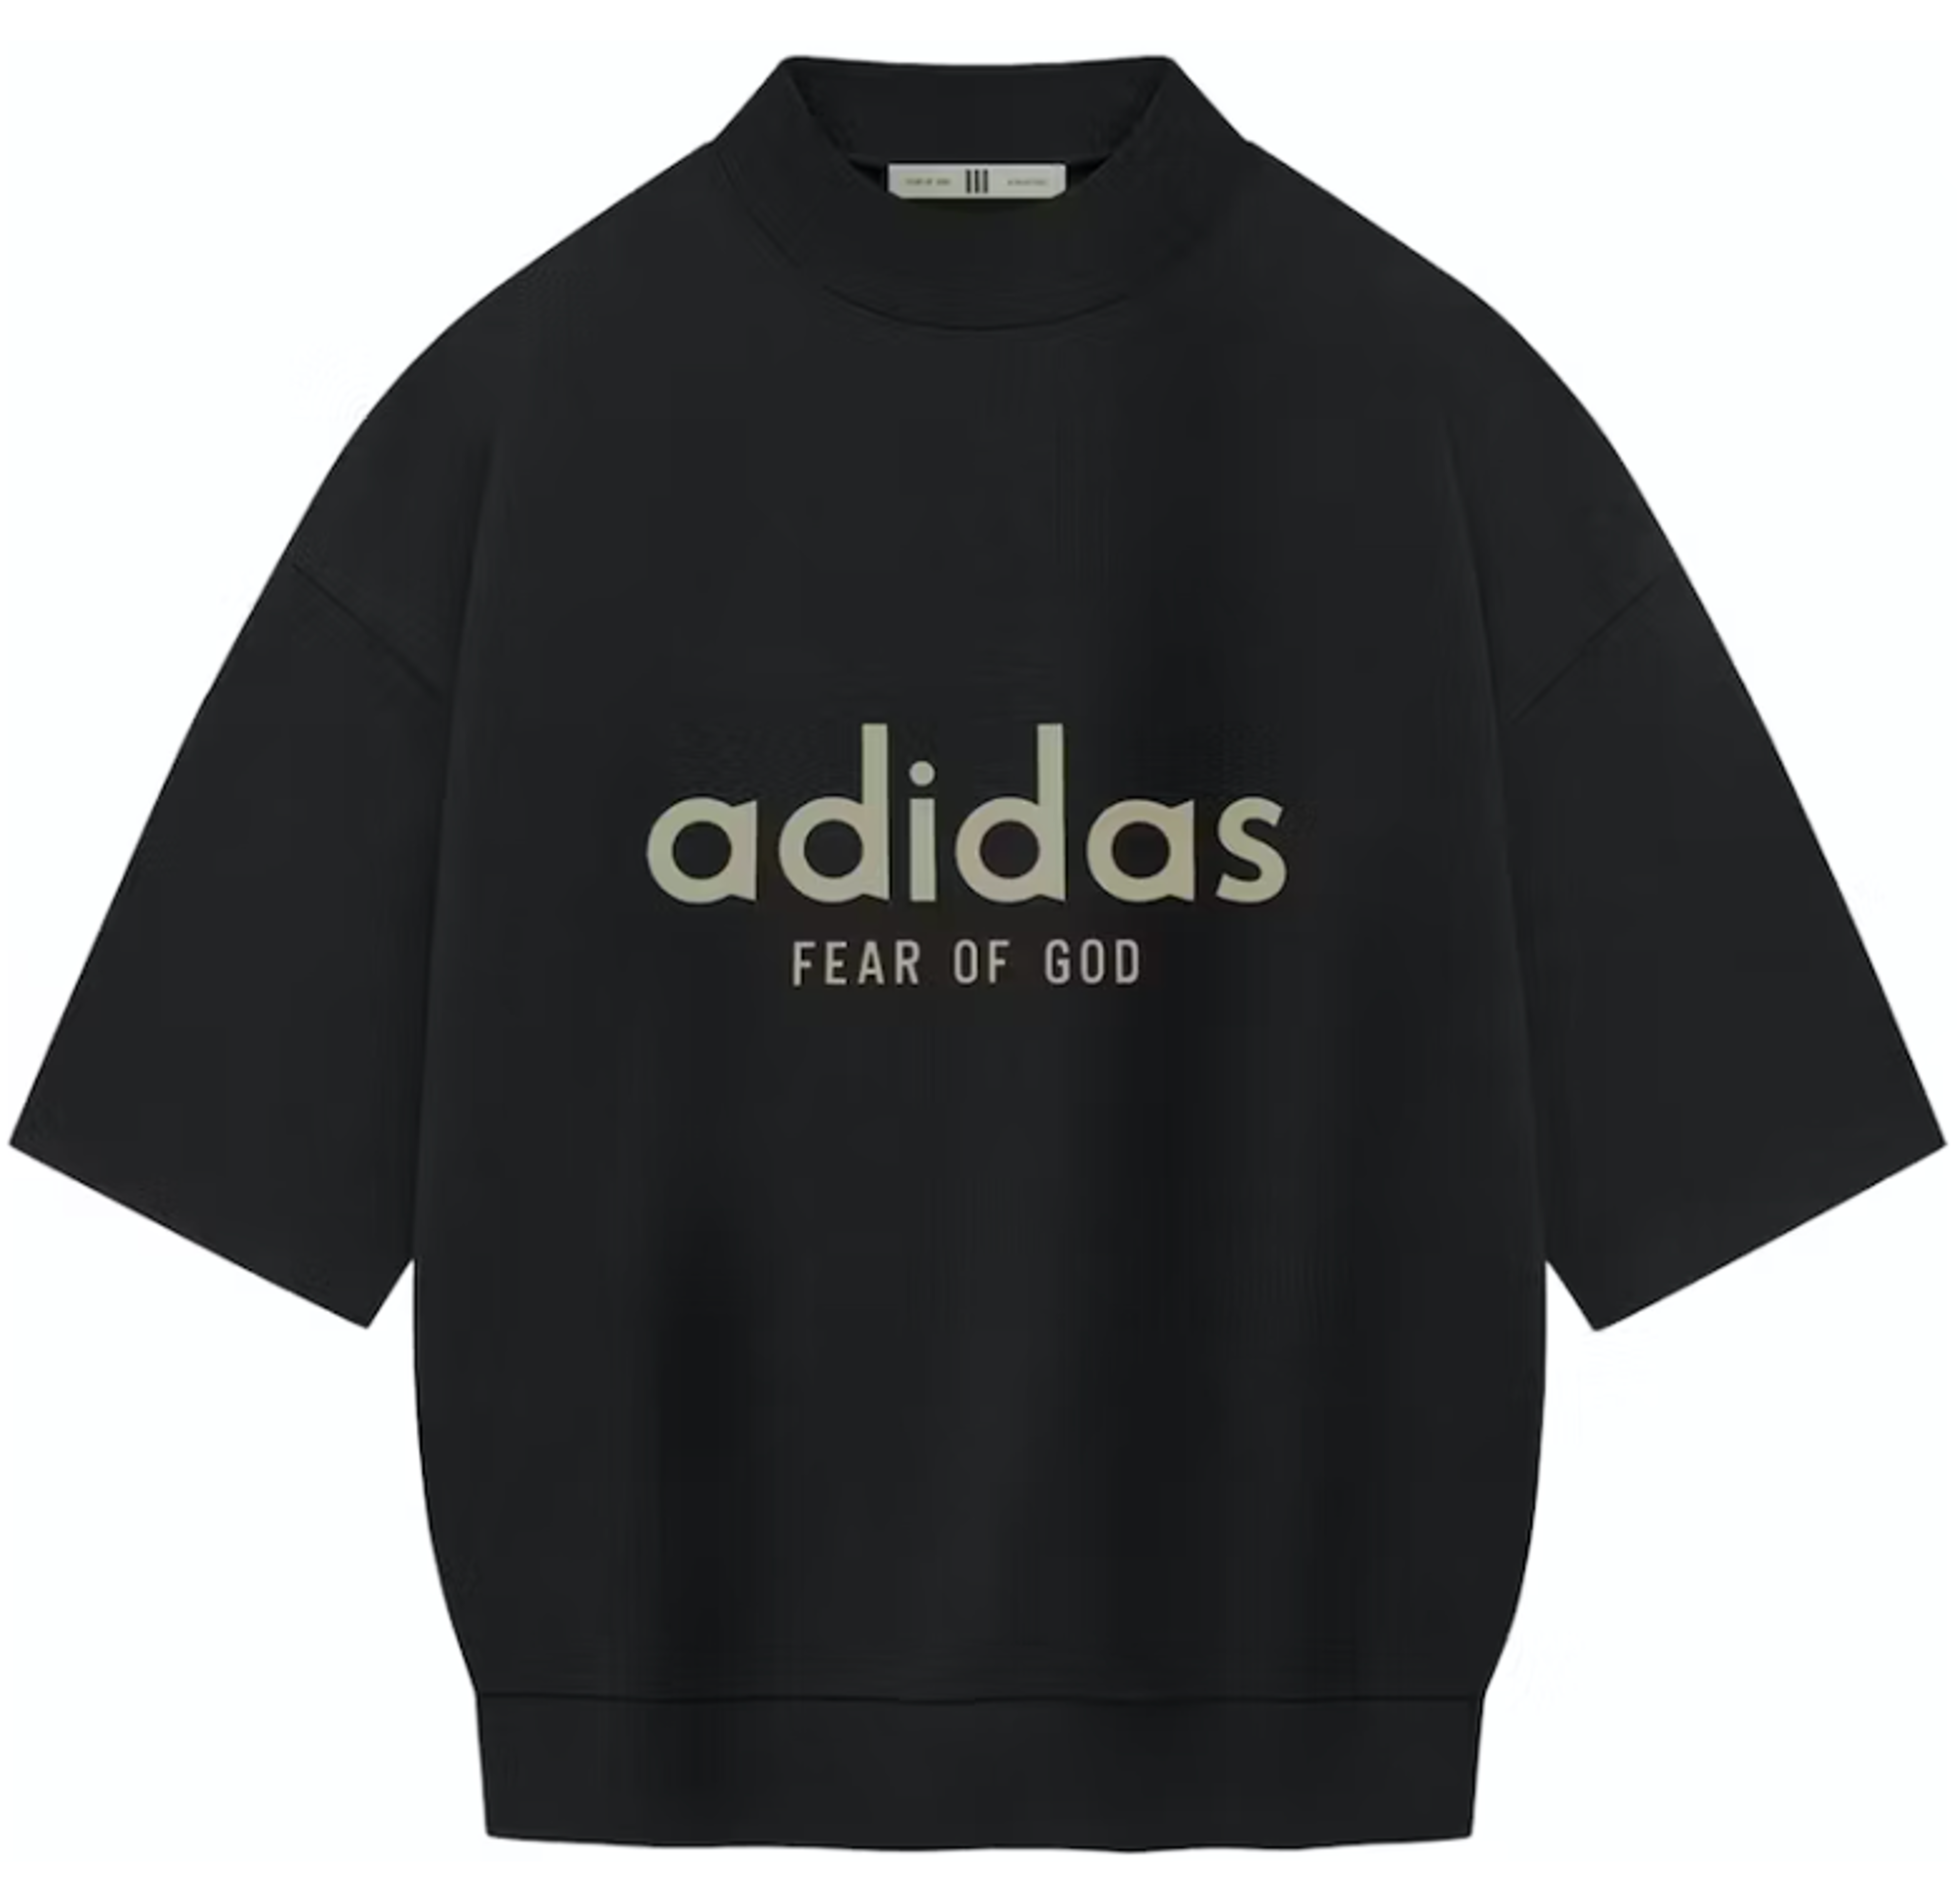 Adidas x Fear of God Athletics Heavy Jersey 3/4 Mock Tee - Black